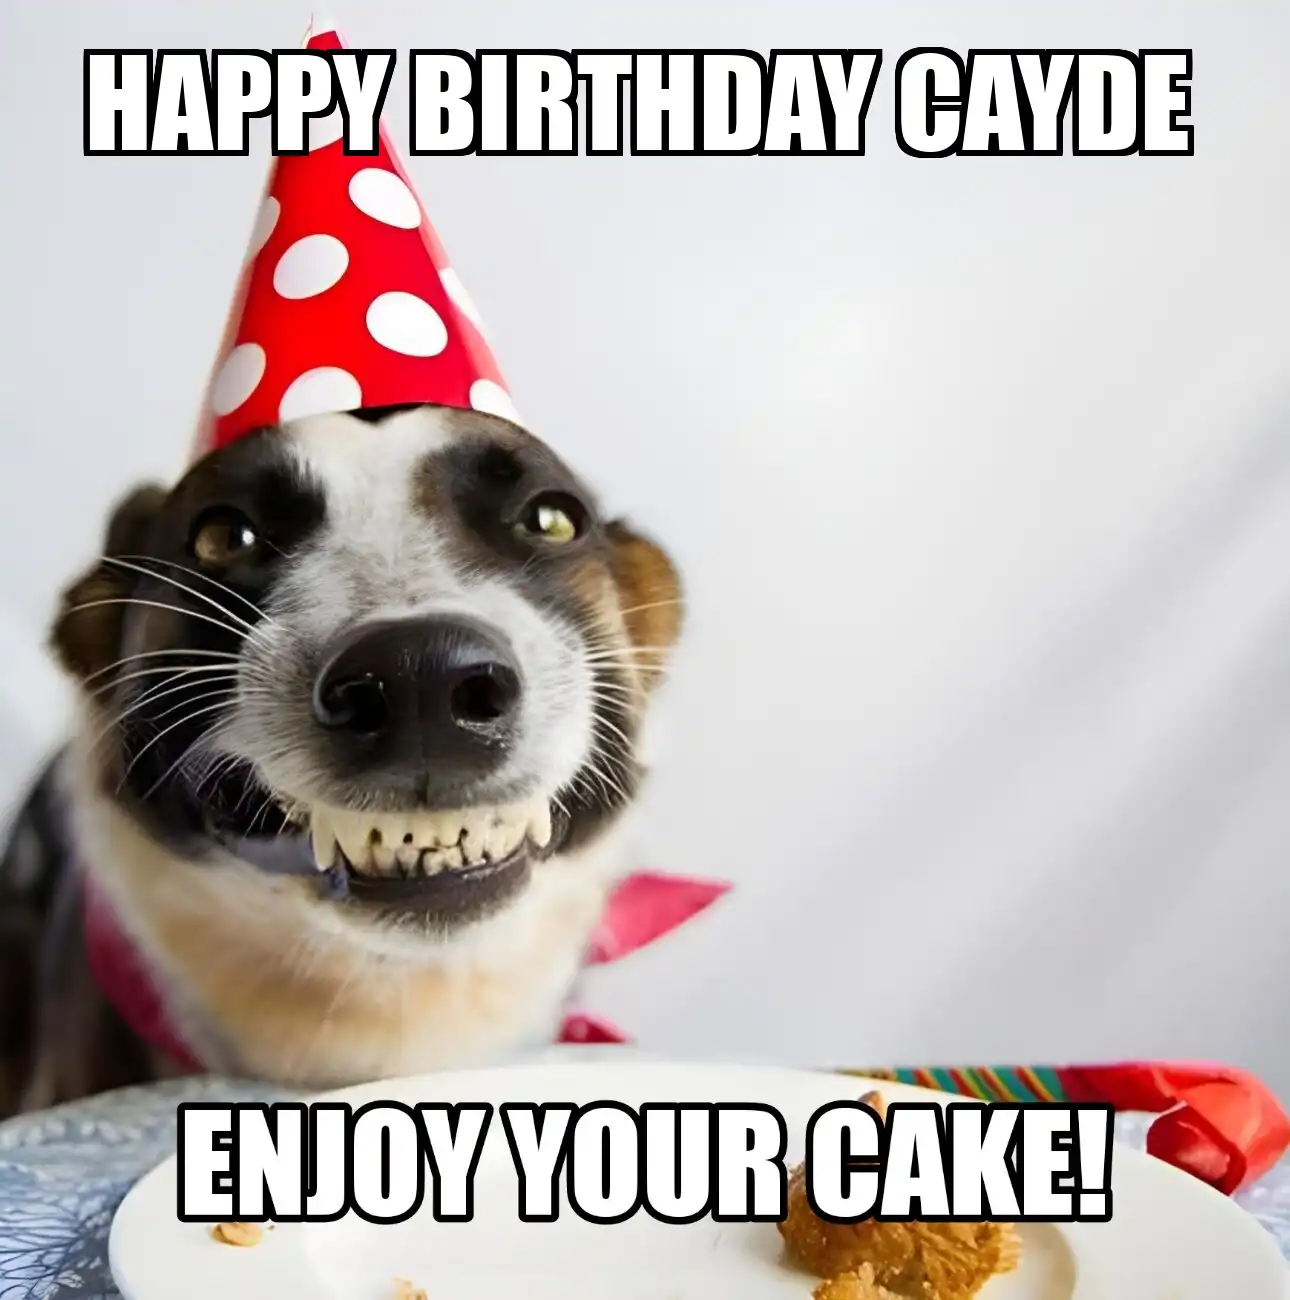 Happy Birthday Cayde Enjoy Your Cake Dog Meme